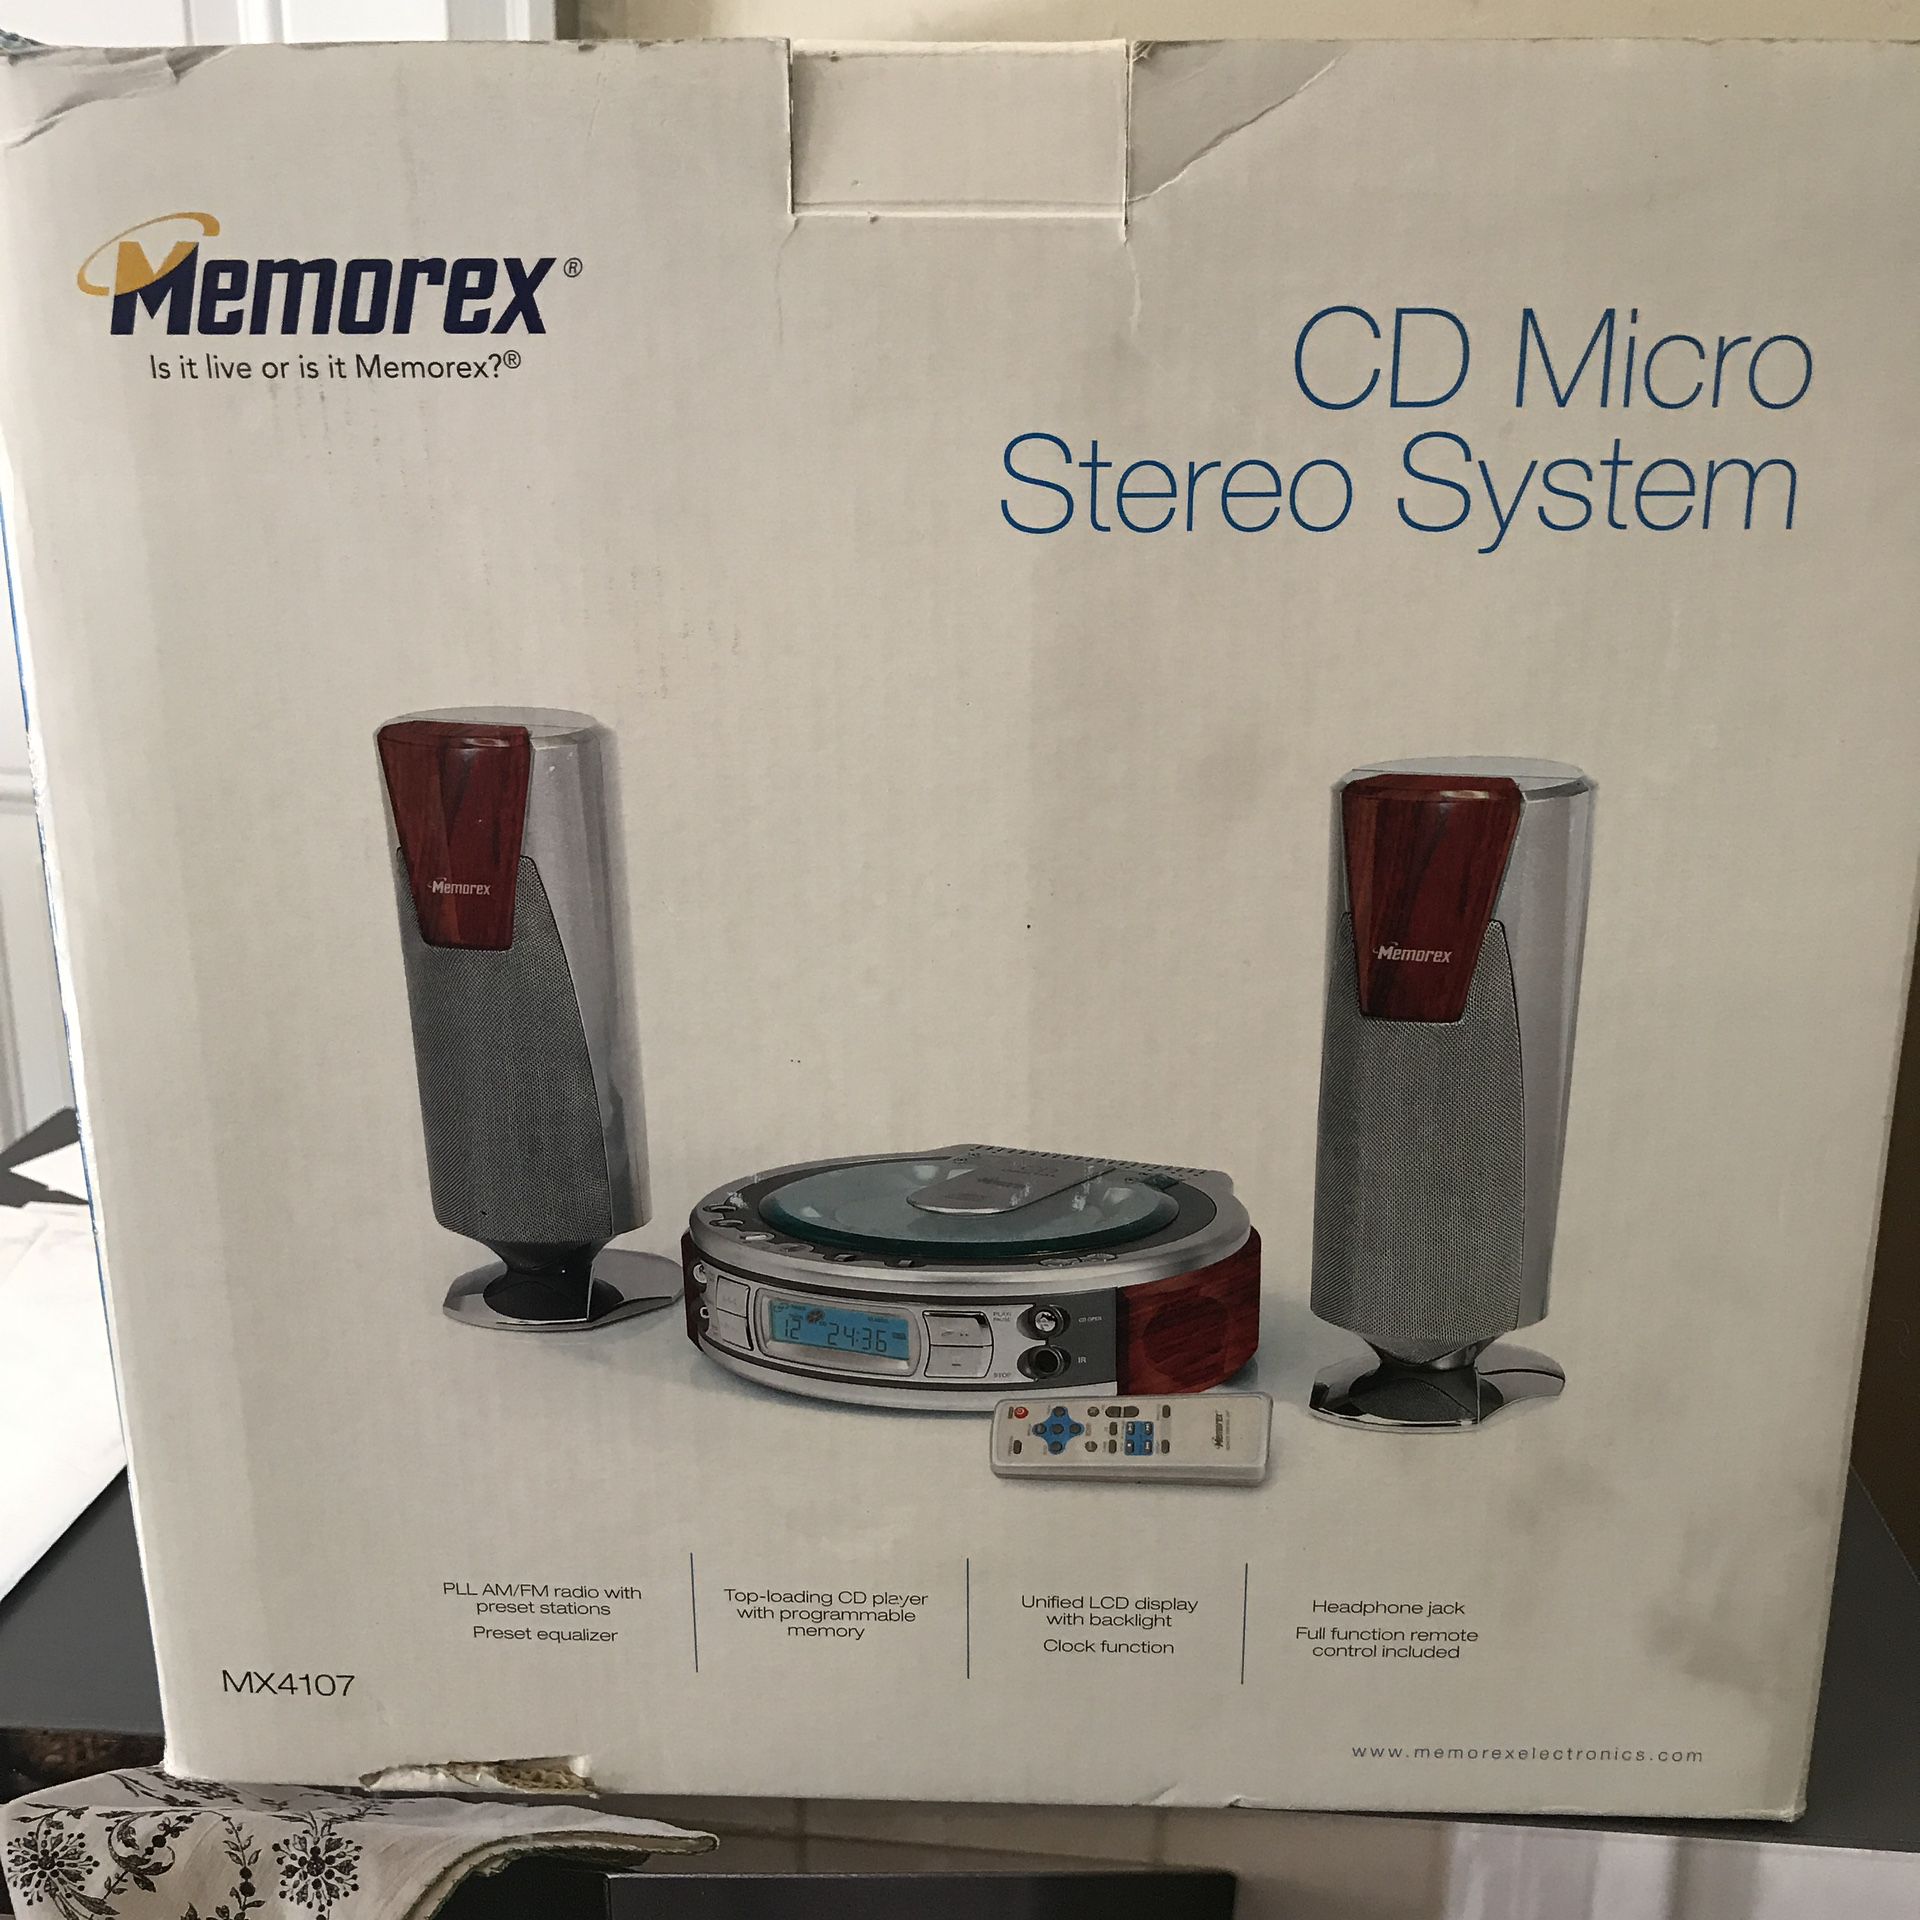 Memorex CD Micro Stereo System